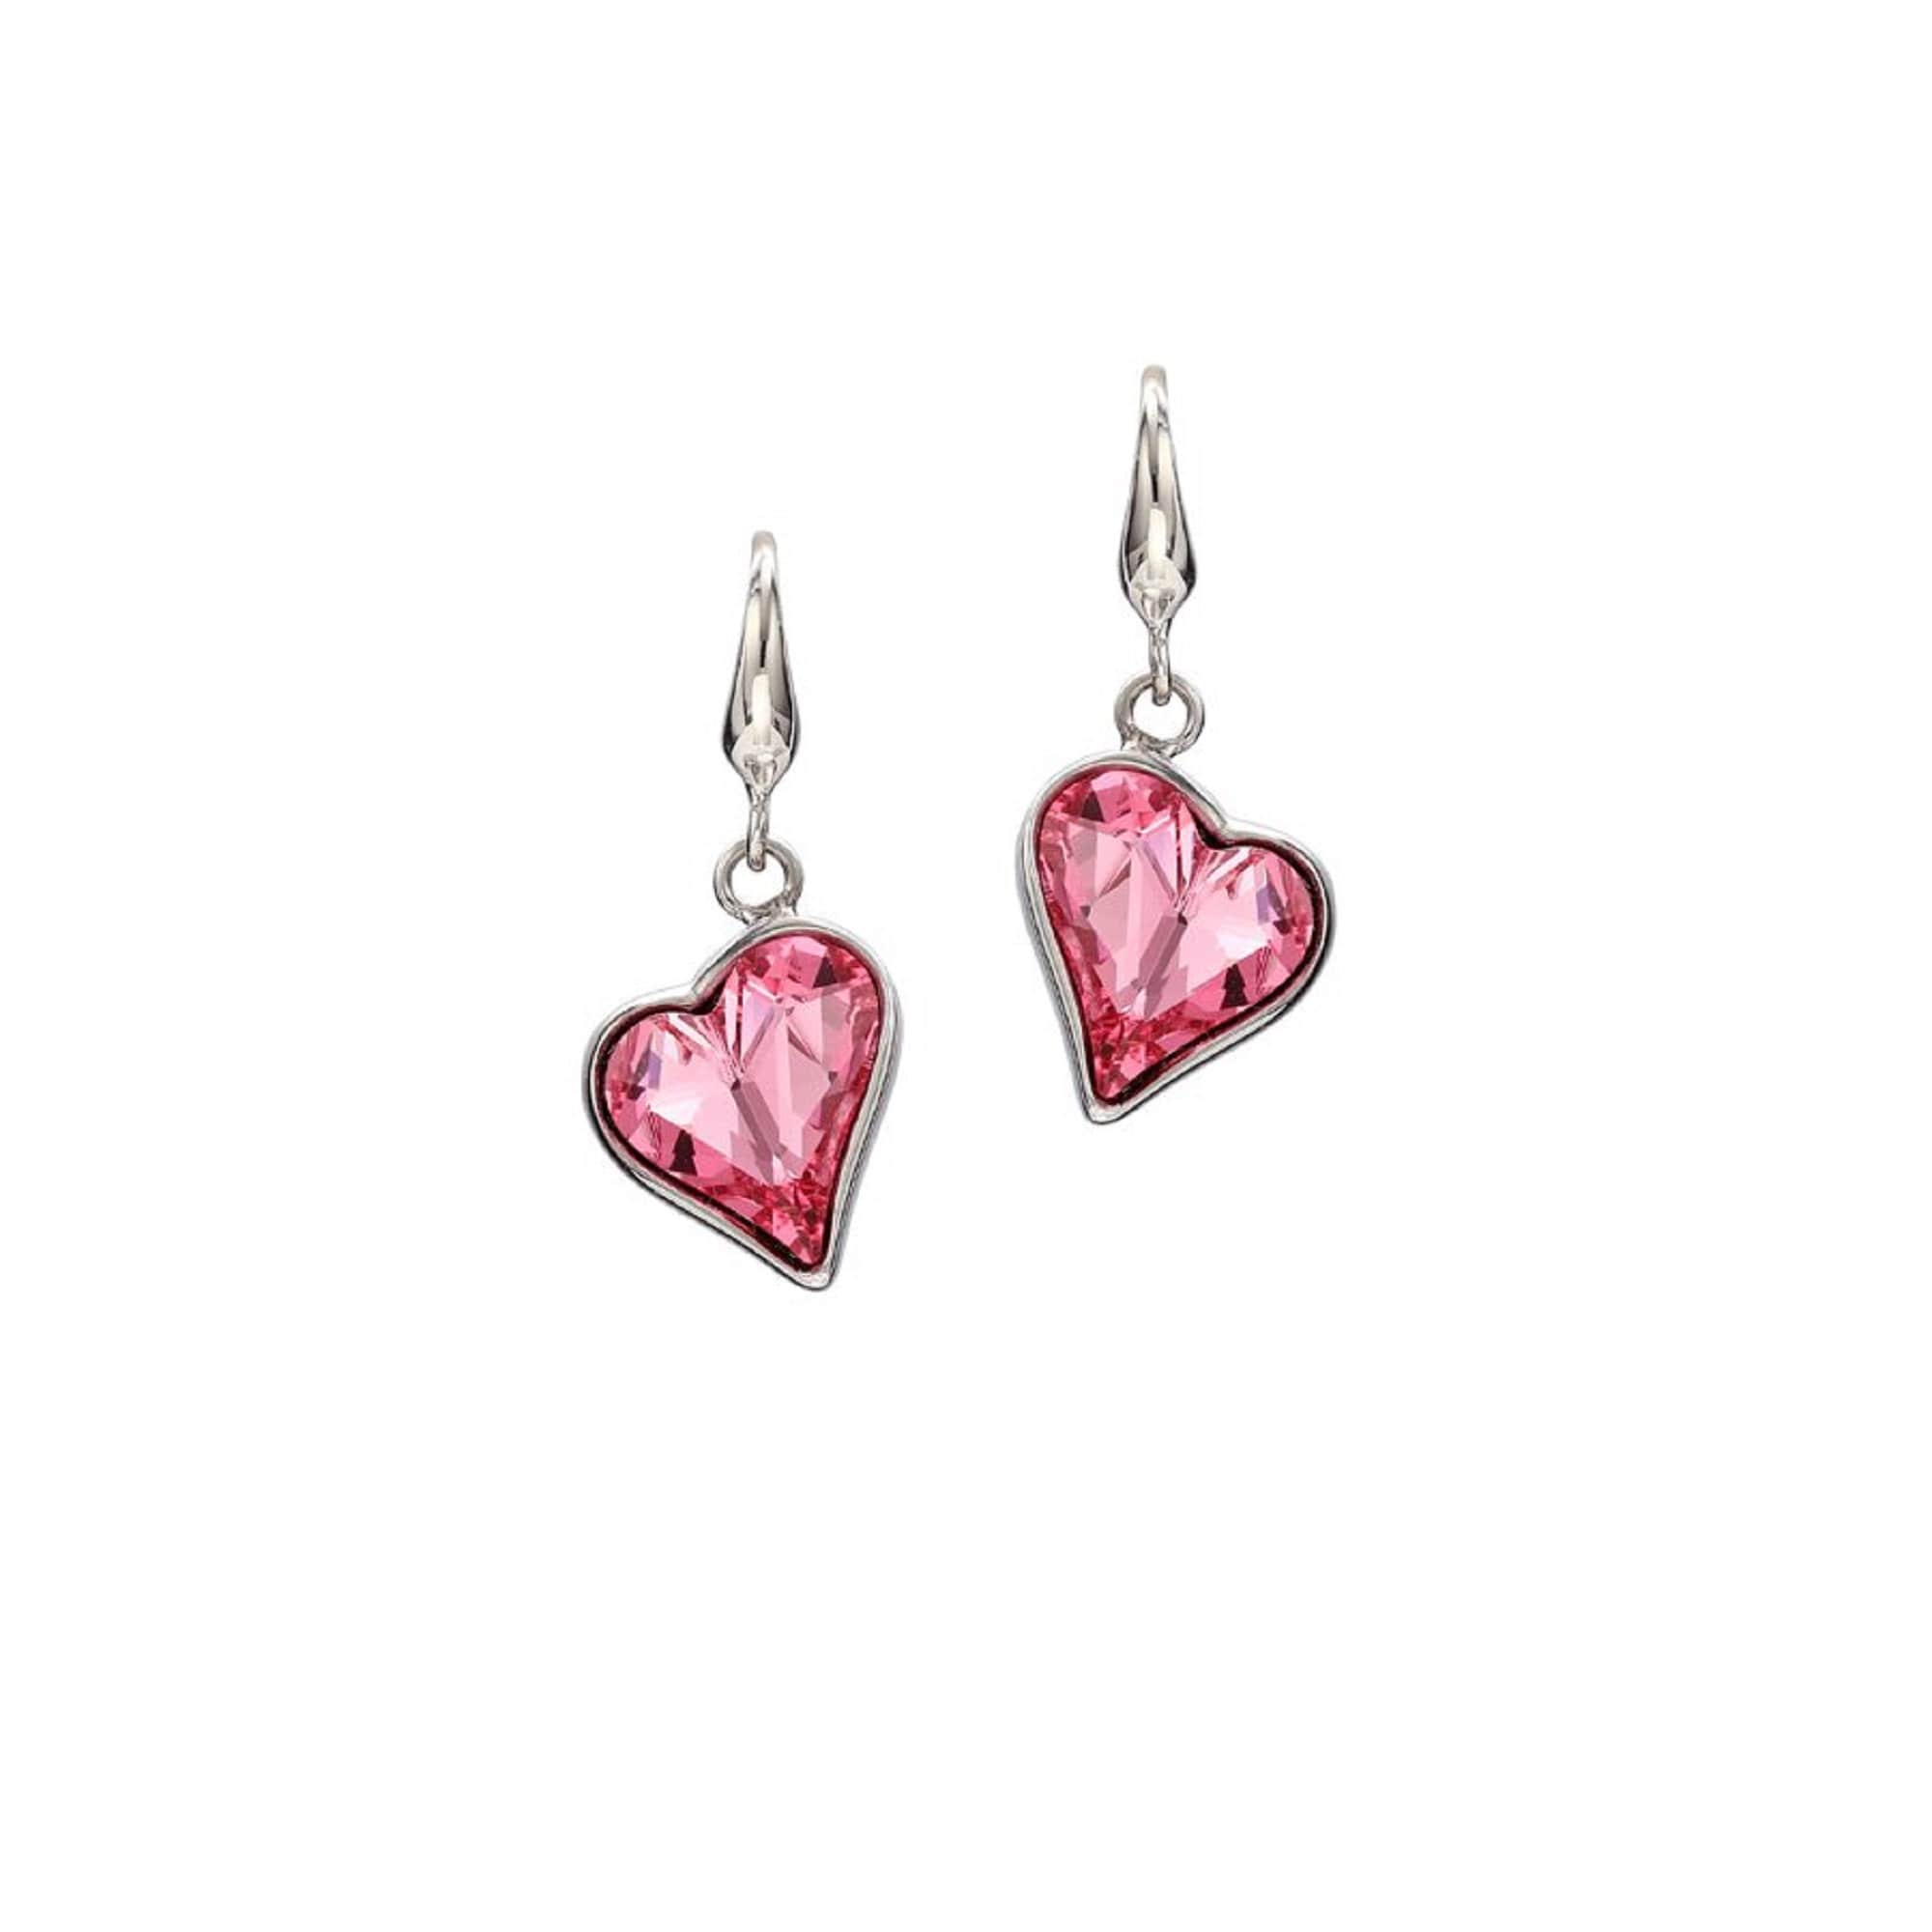 Details more than 70 heart shaped crystal earrings - esthdonghoadian